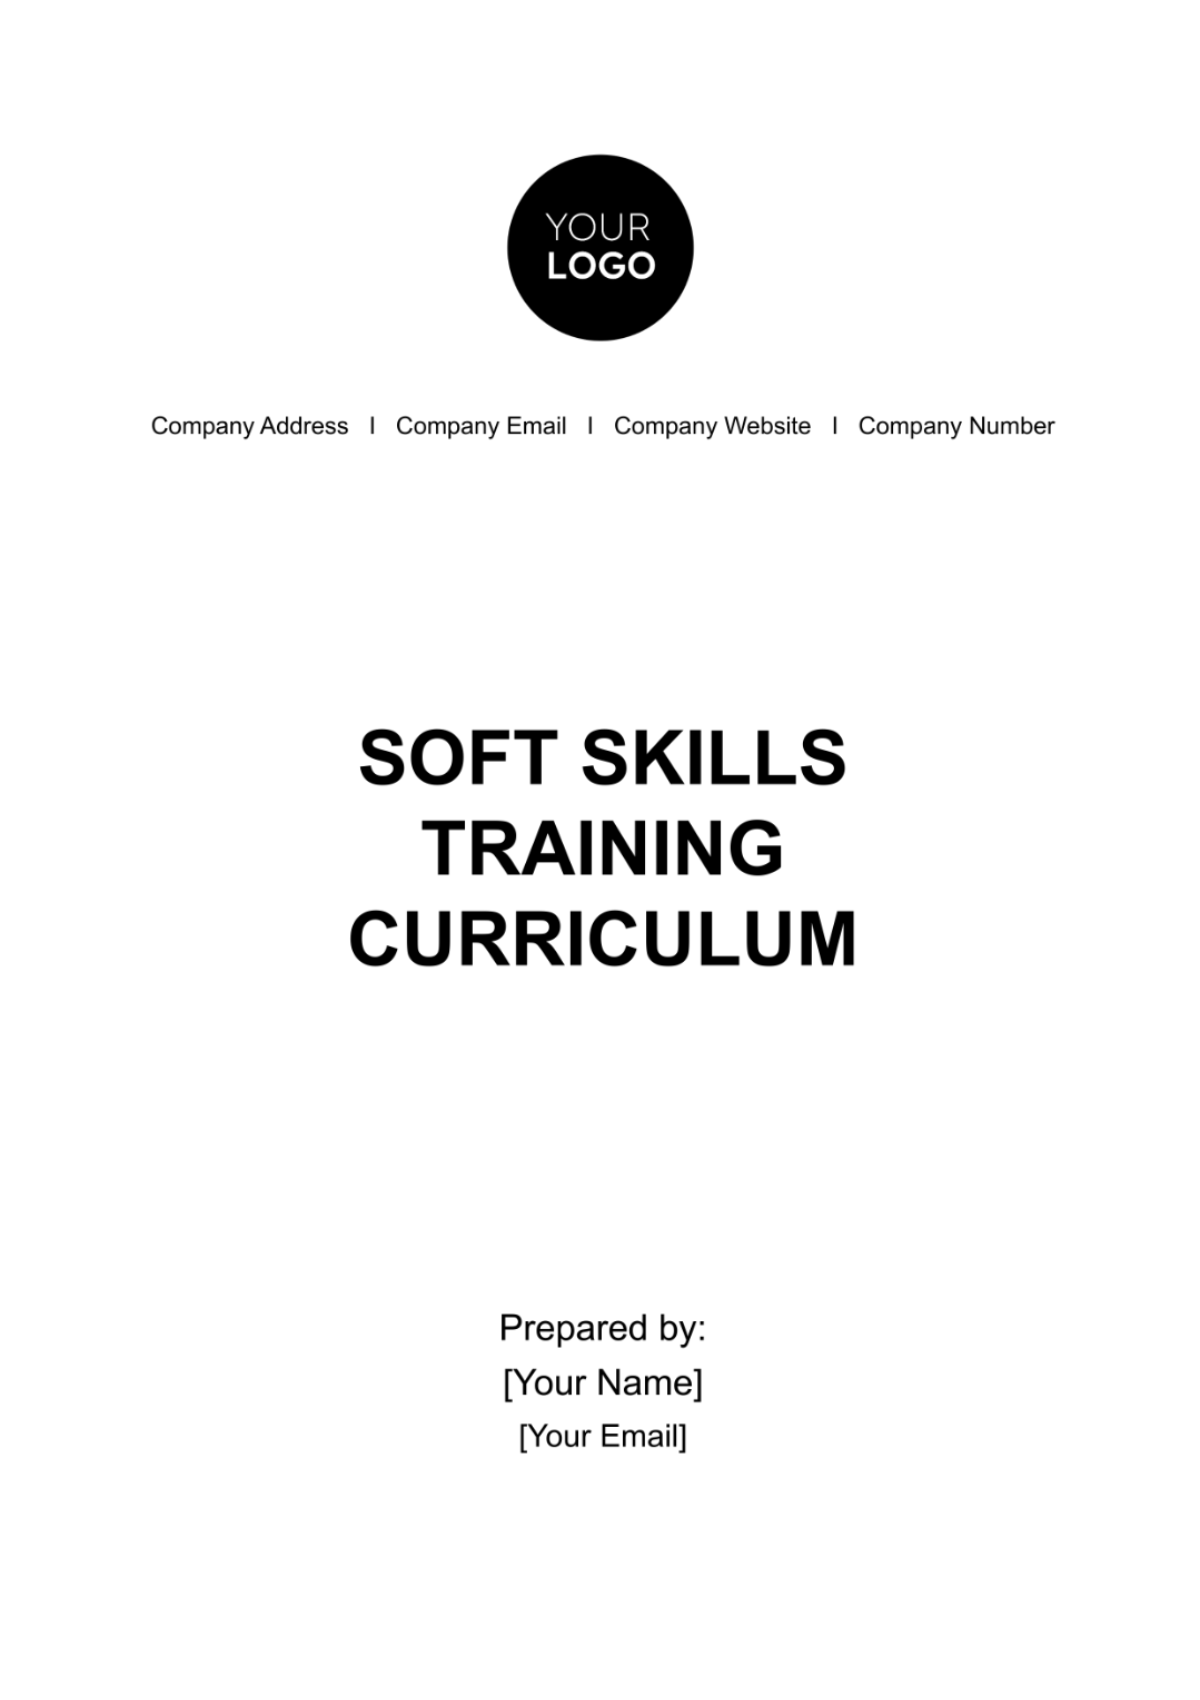 Free Soft Skills Training Curriculum HR Template